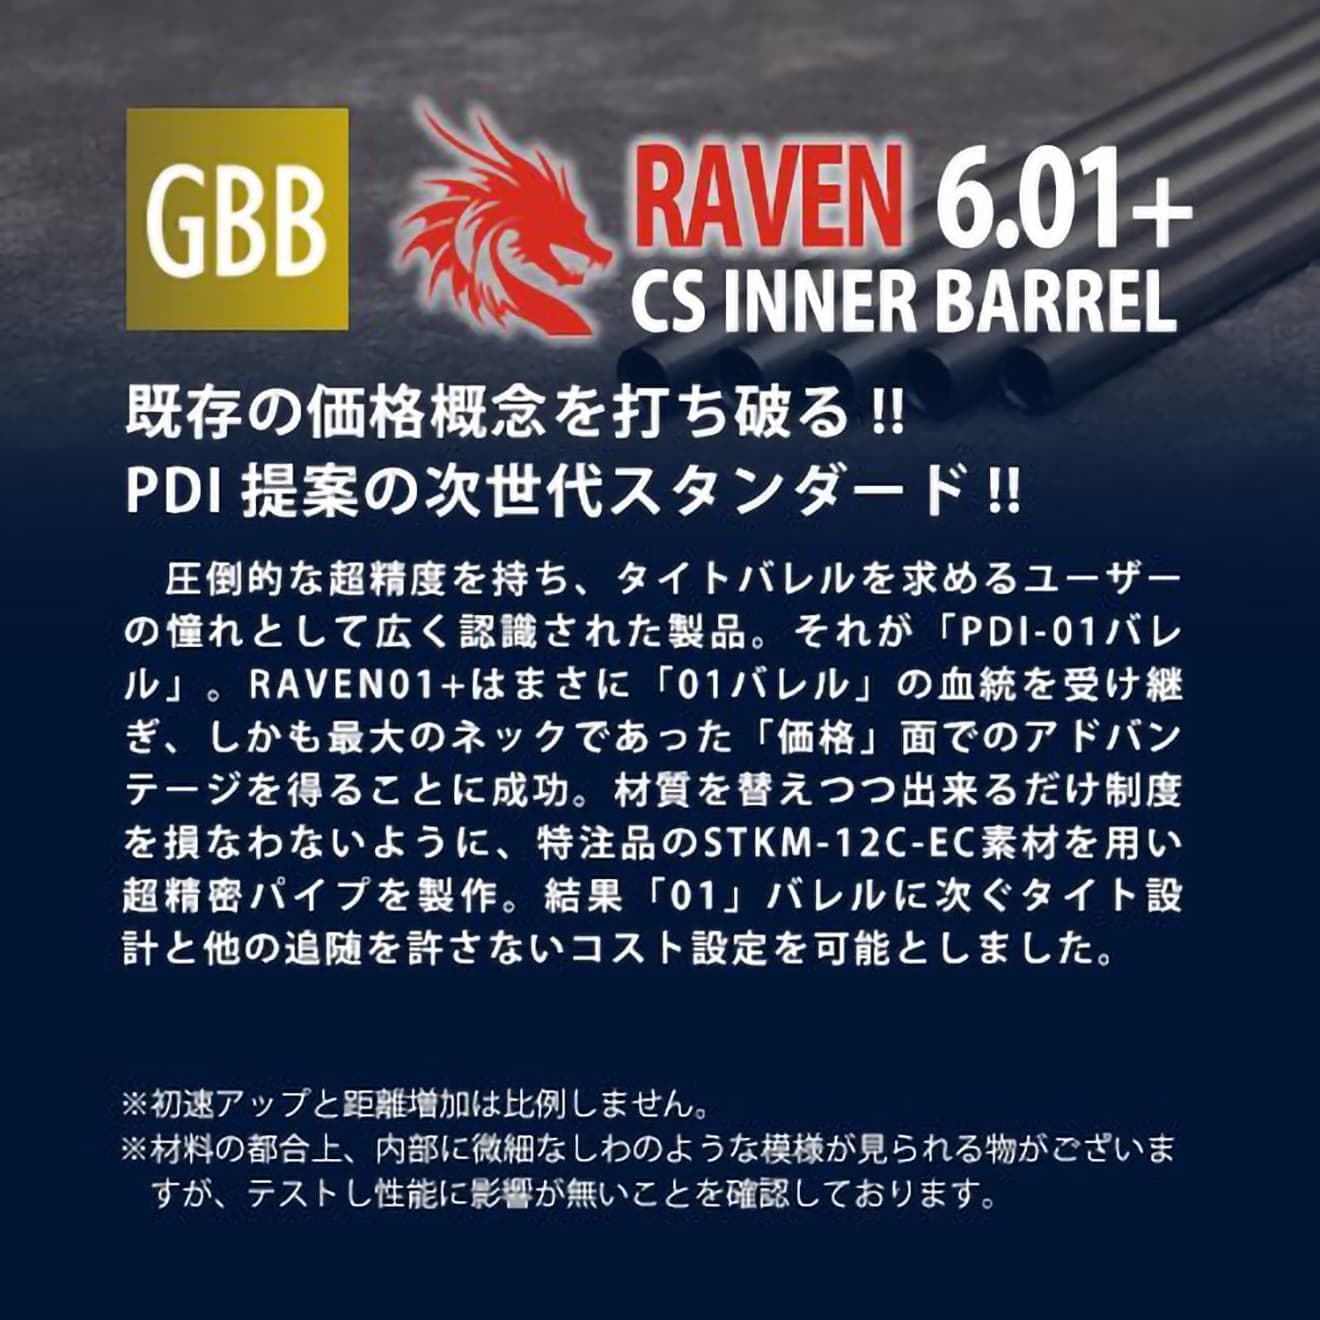 PDI RAVENシリーズ 01+ GBB M92F専用 精密インナーバレル(6.01±0.007) 106mm